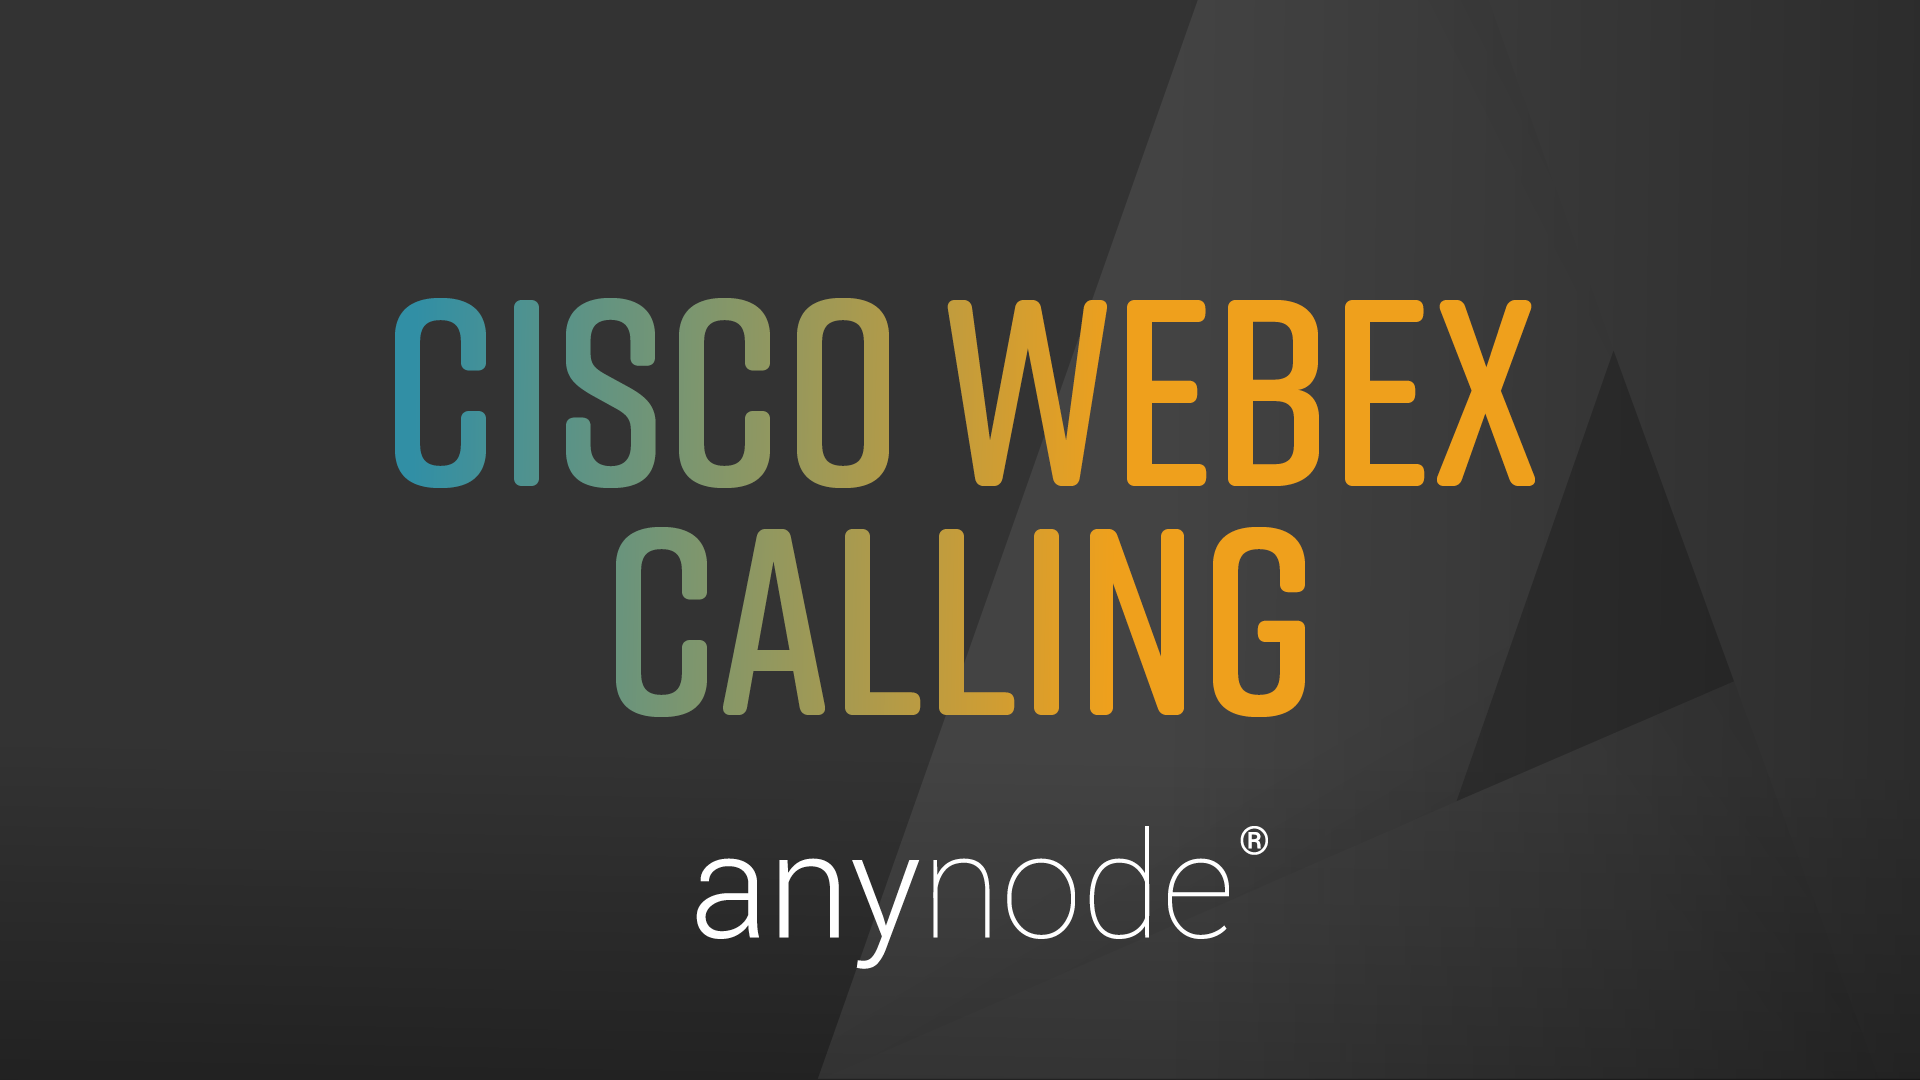 anynode está certificado para Cisco Webex Calling Peering. Con Cisco Webex Calling, anynode puede conectarse a casi cualquier PSTN o conectarse a PBX de terceros.